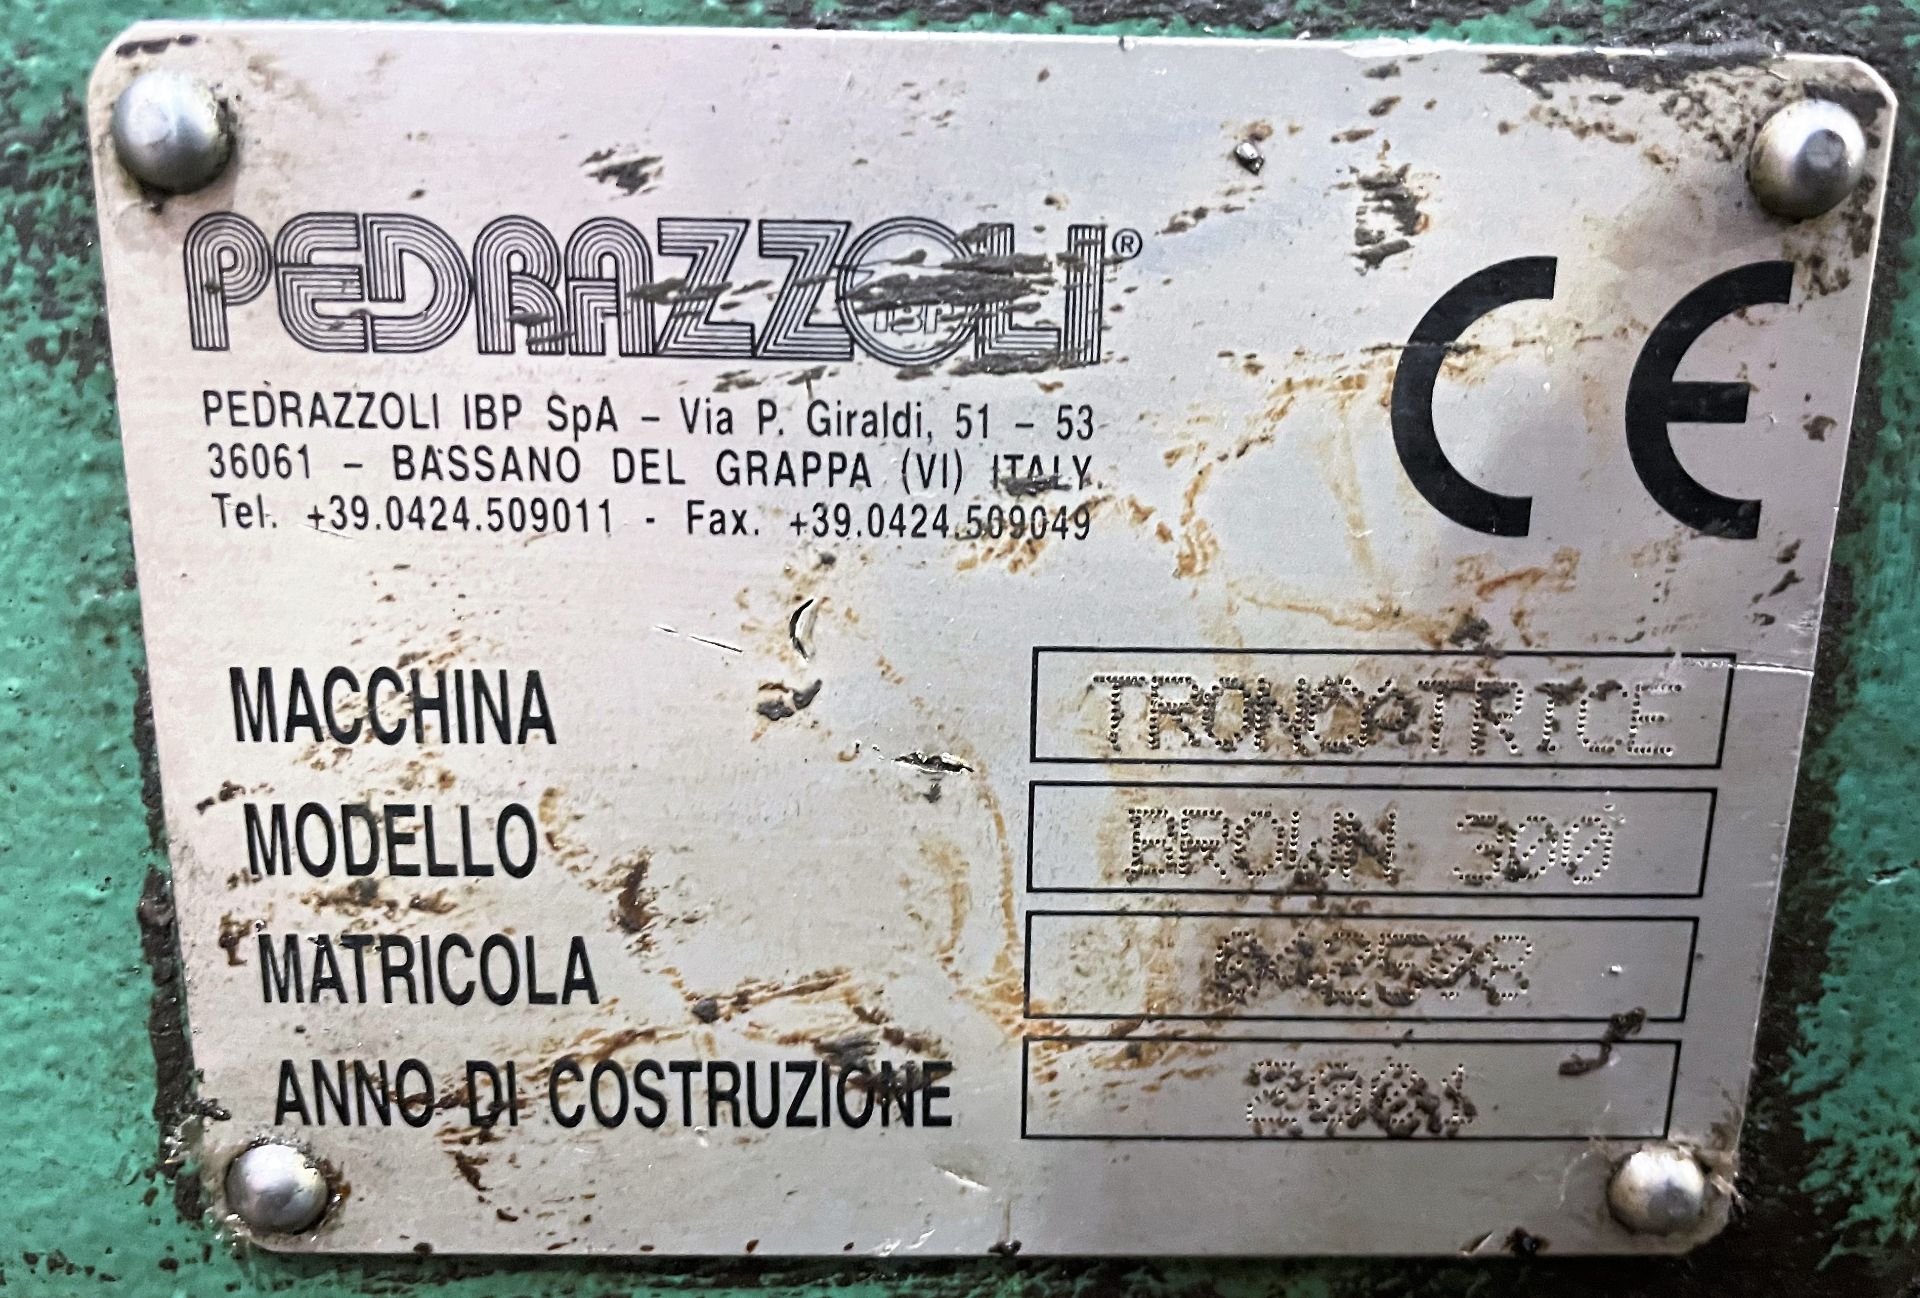 A Pedrazolli Brown 300 Metalworking Cut Off Saw No.042508 (2001) with stand. - Bild 3 aus 3